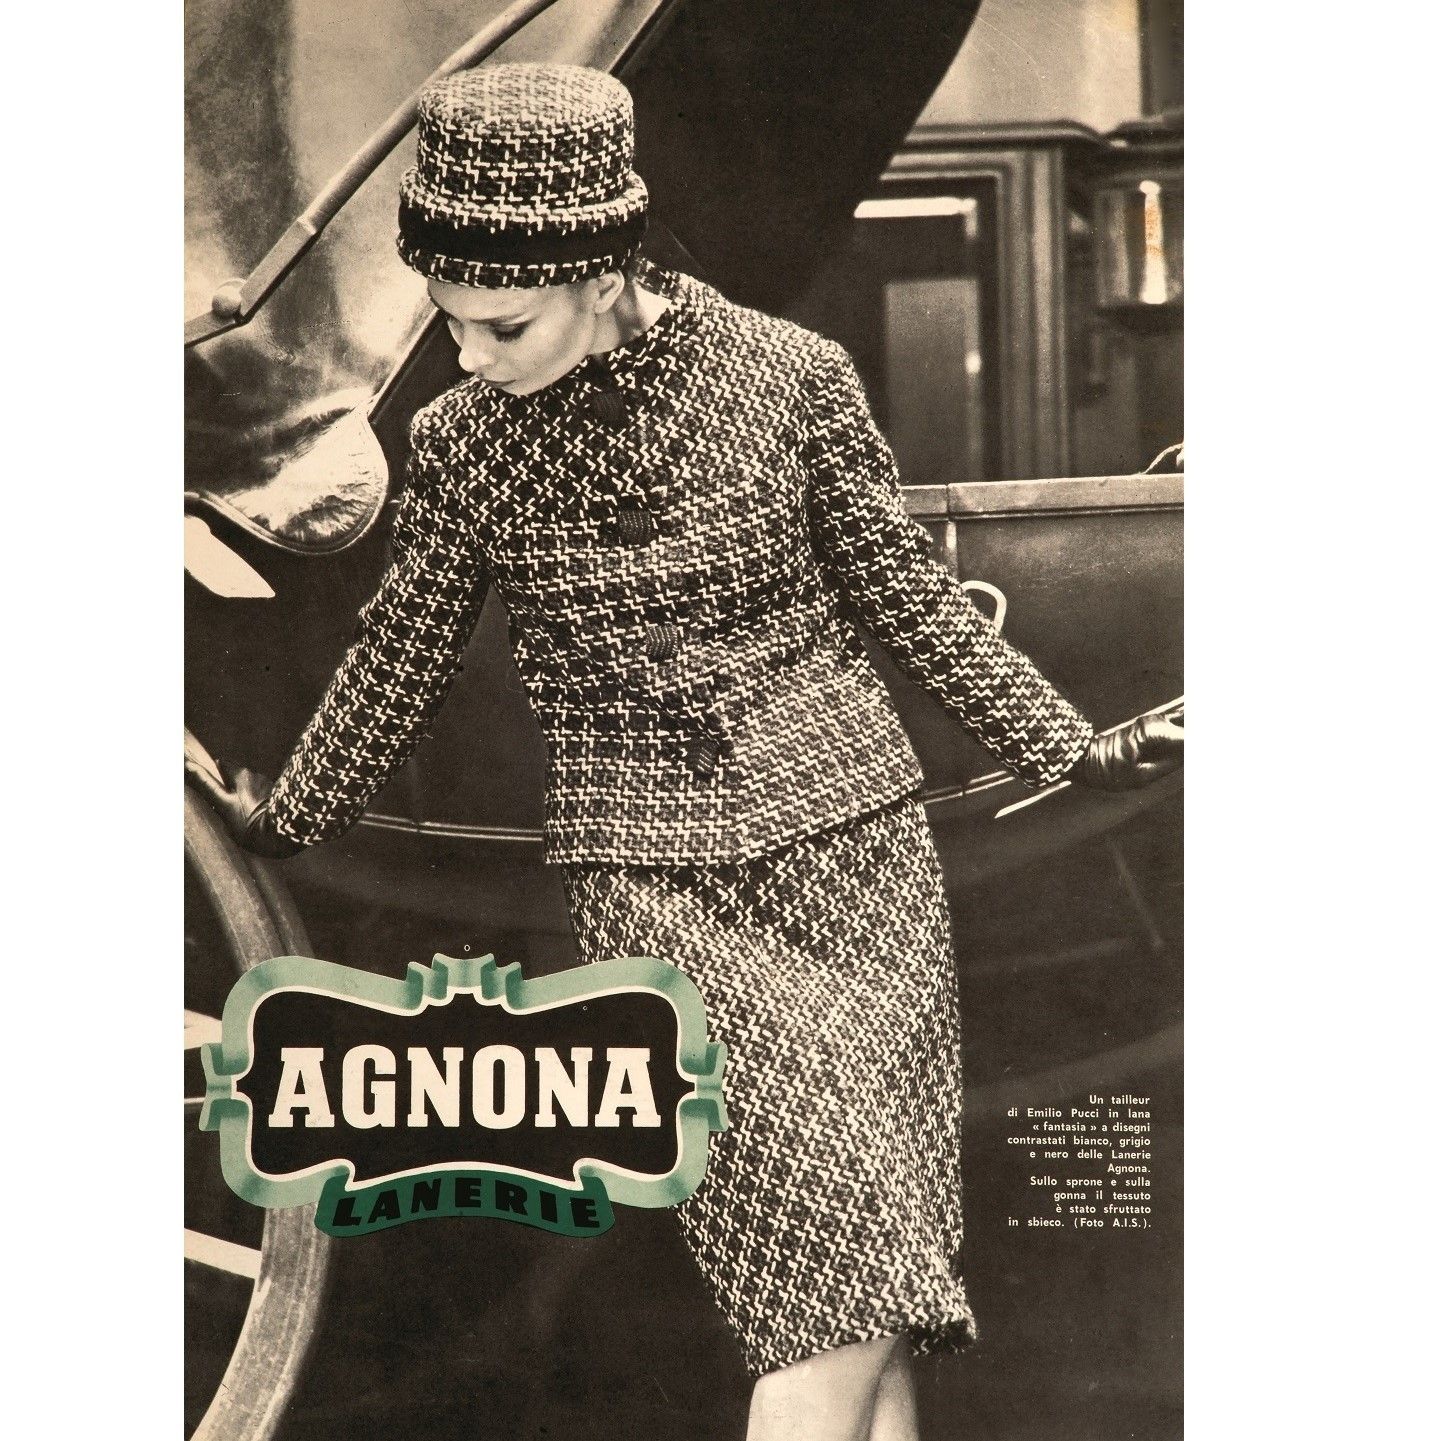 Lanerie Agnona Fabricを使用したエミリオ・プッチ作のスーツ 1963-64年秋冬